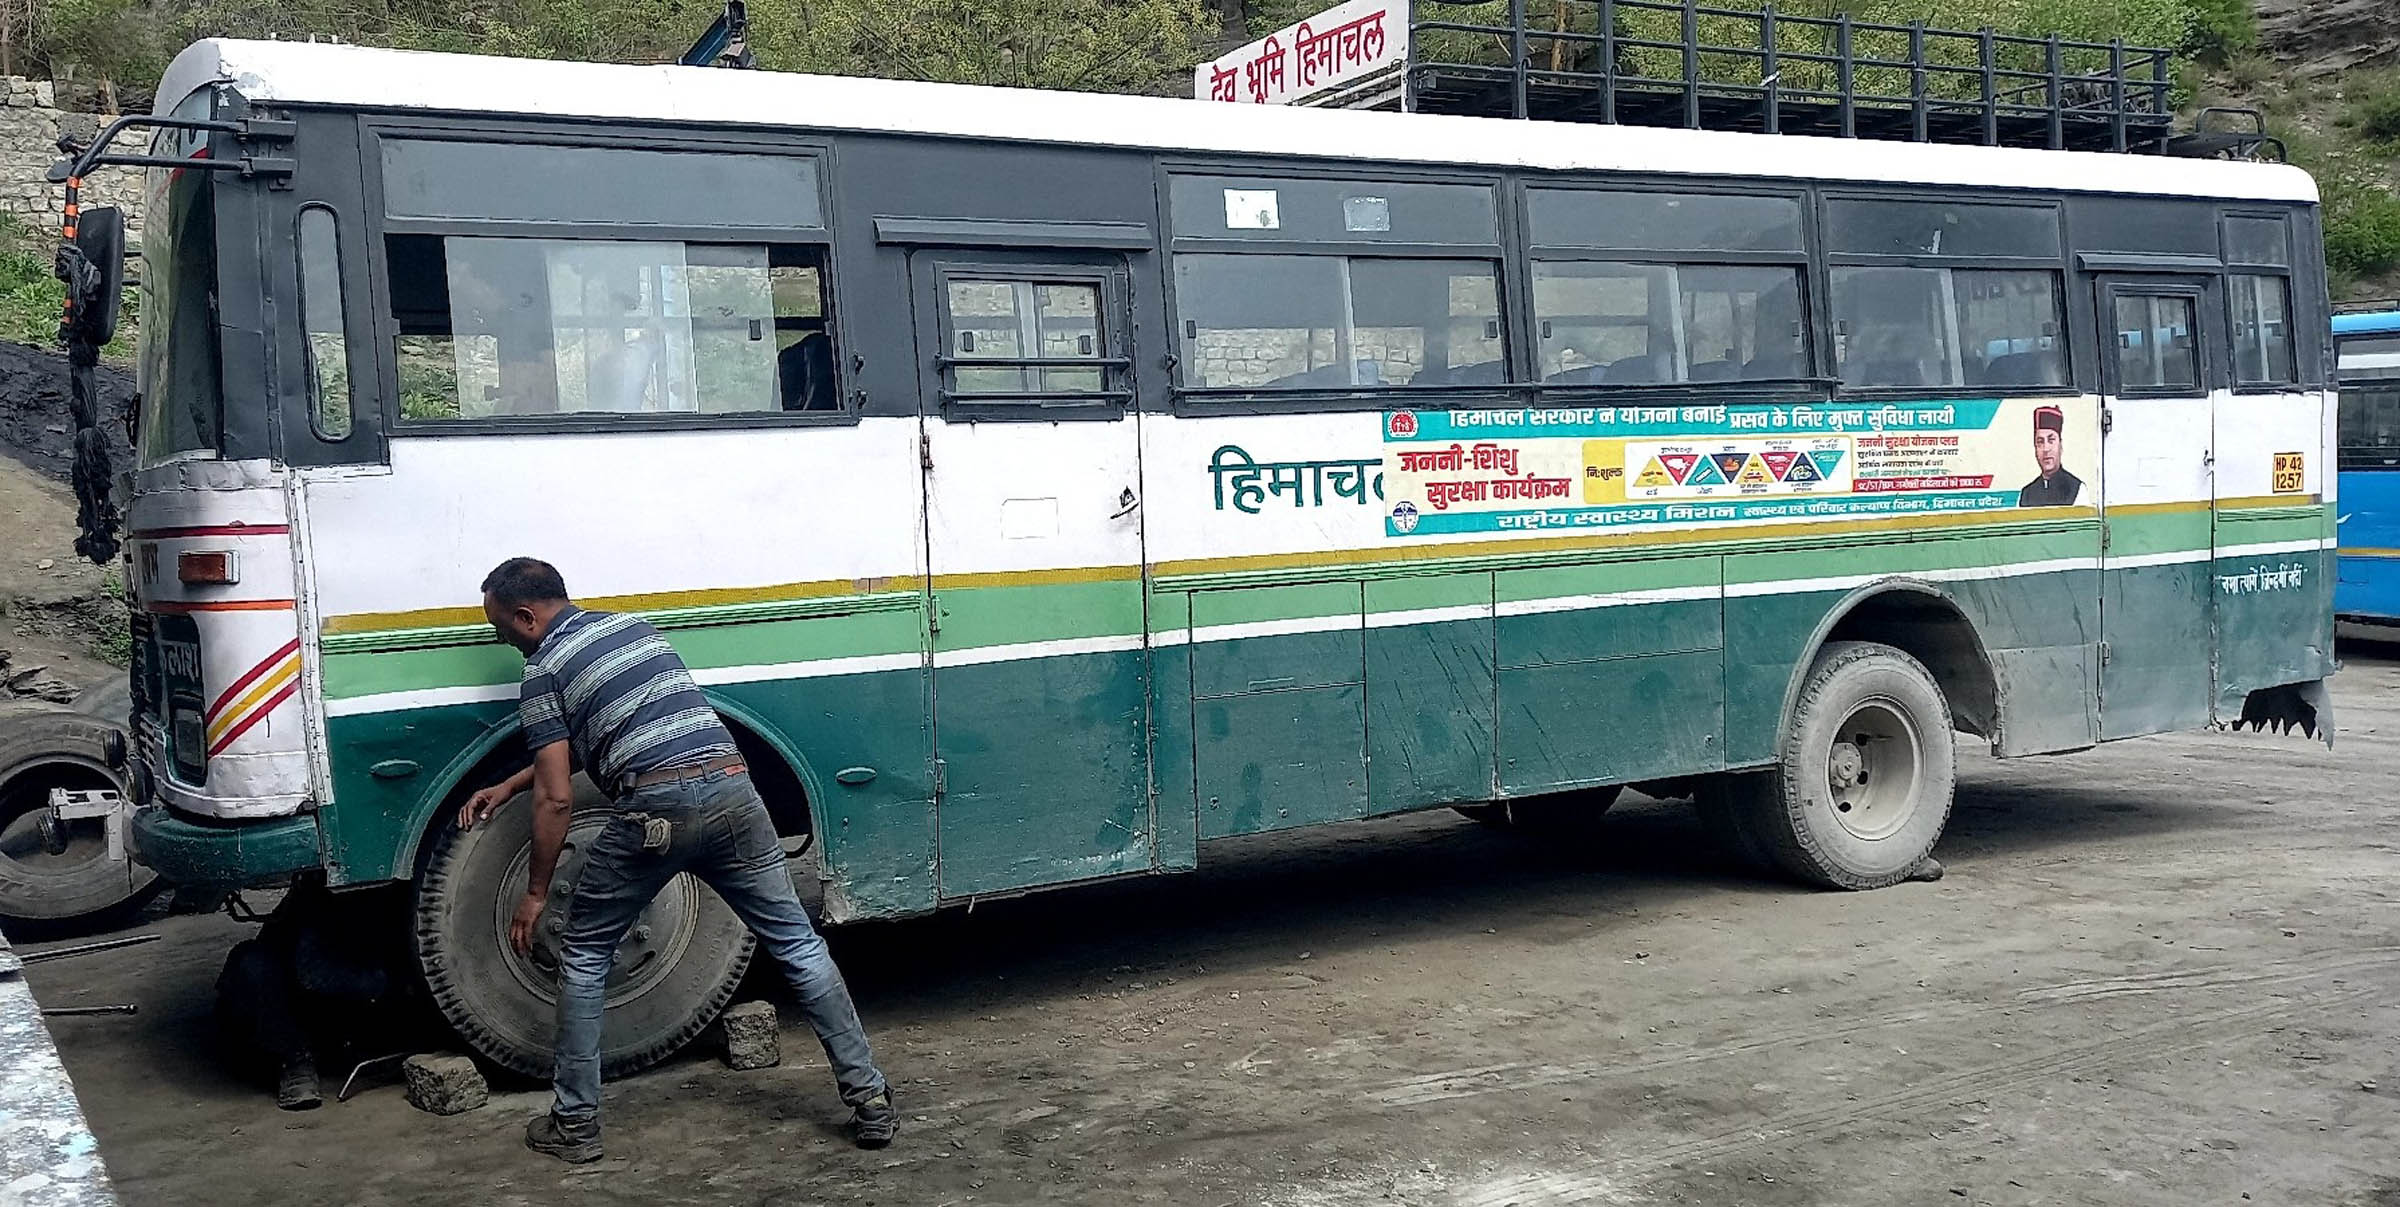 Past life span, 84 HRTC buses still running in three Himachal Pradesh districts